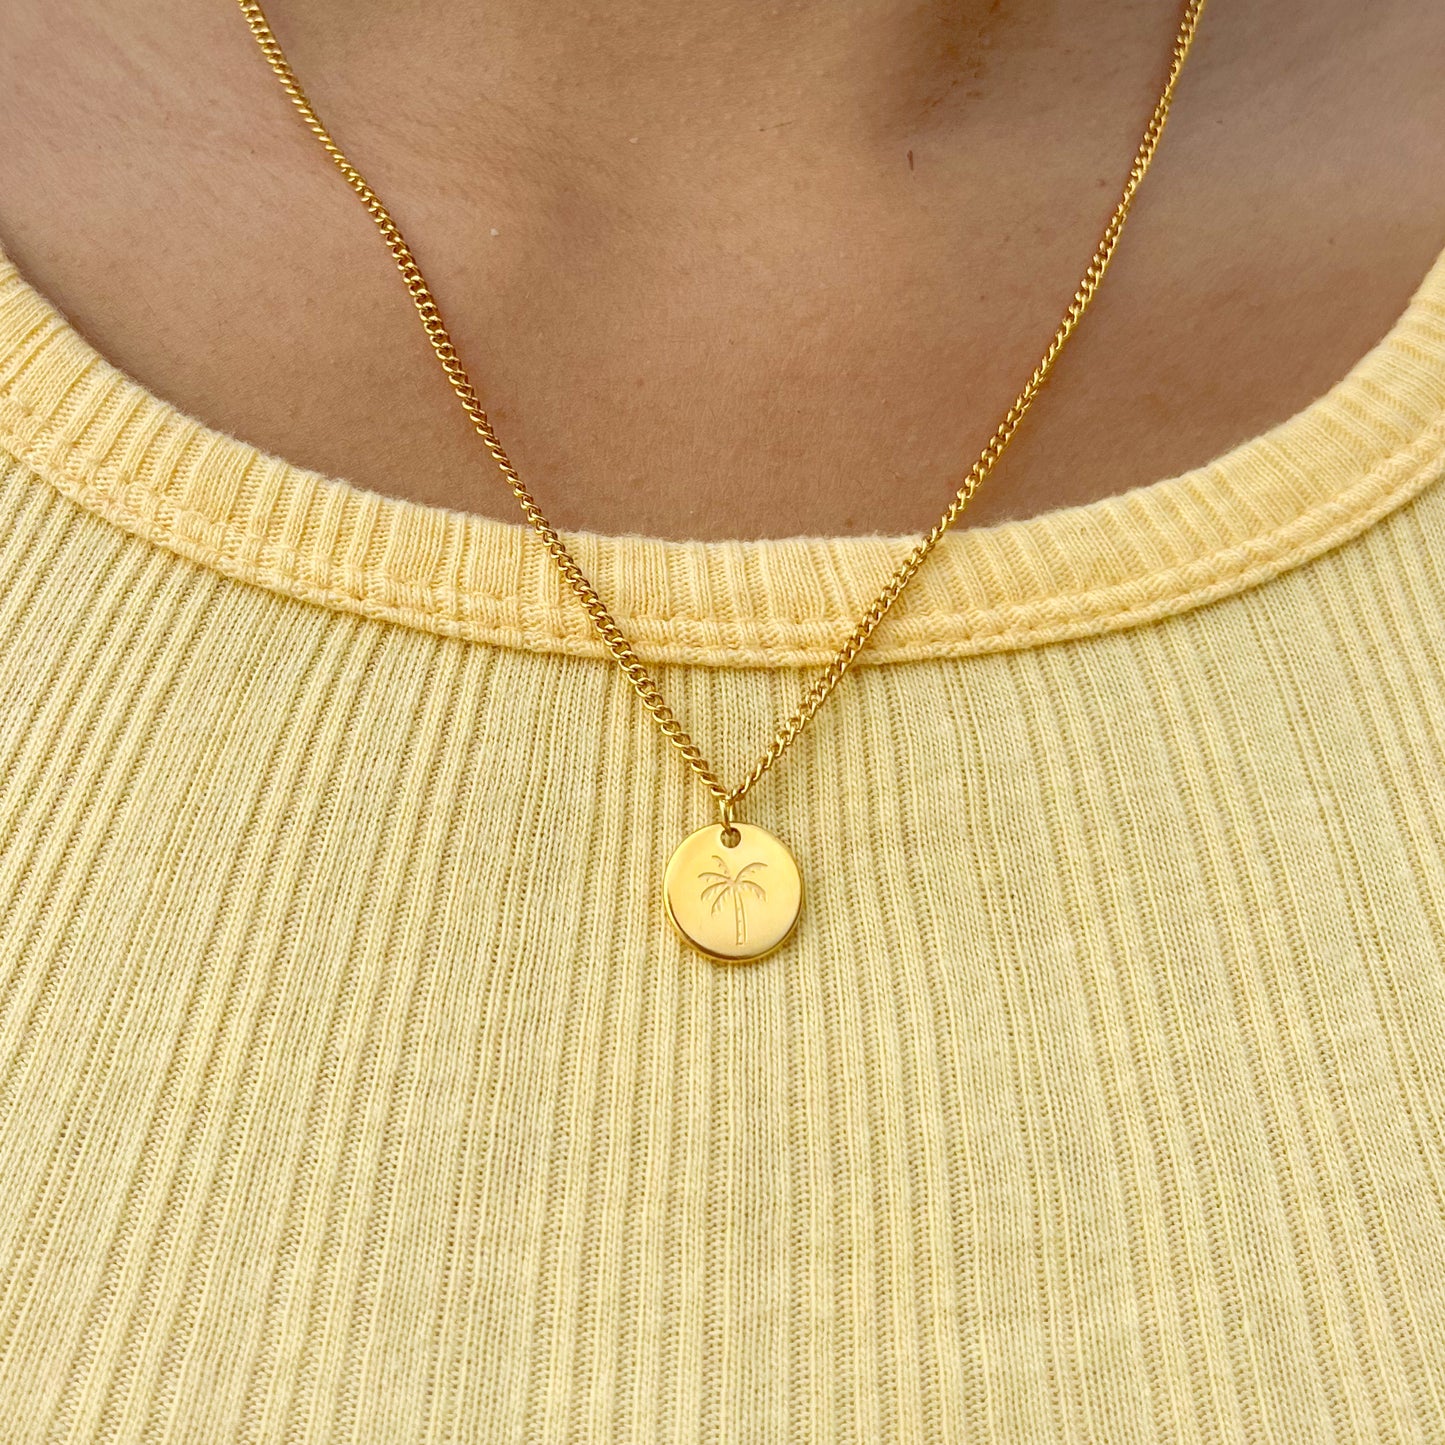 Palmtree golden necklace